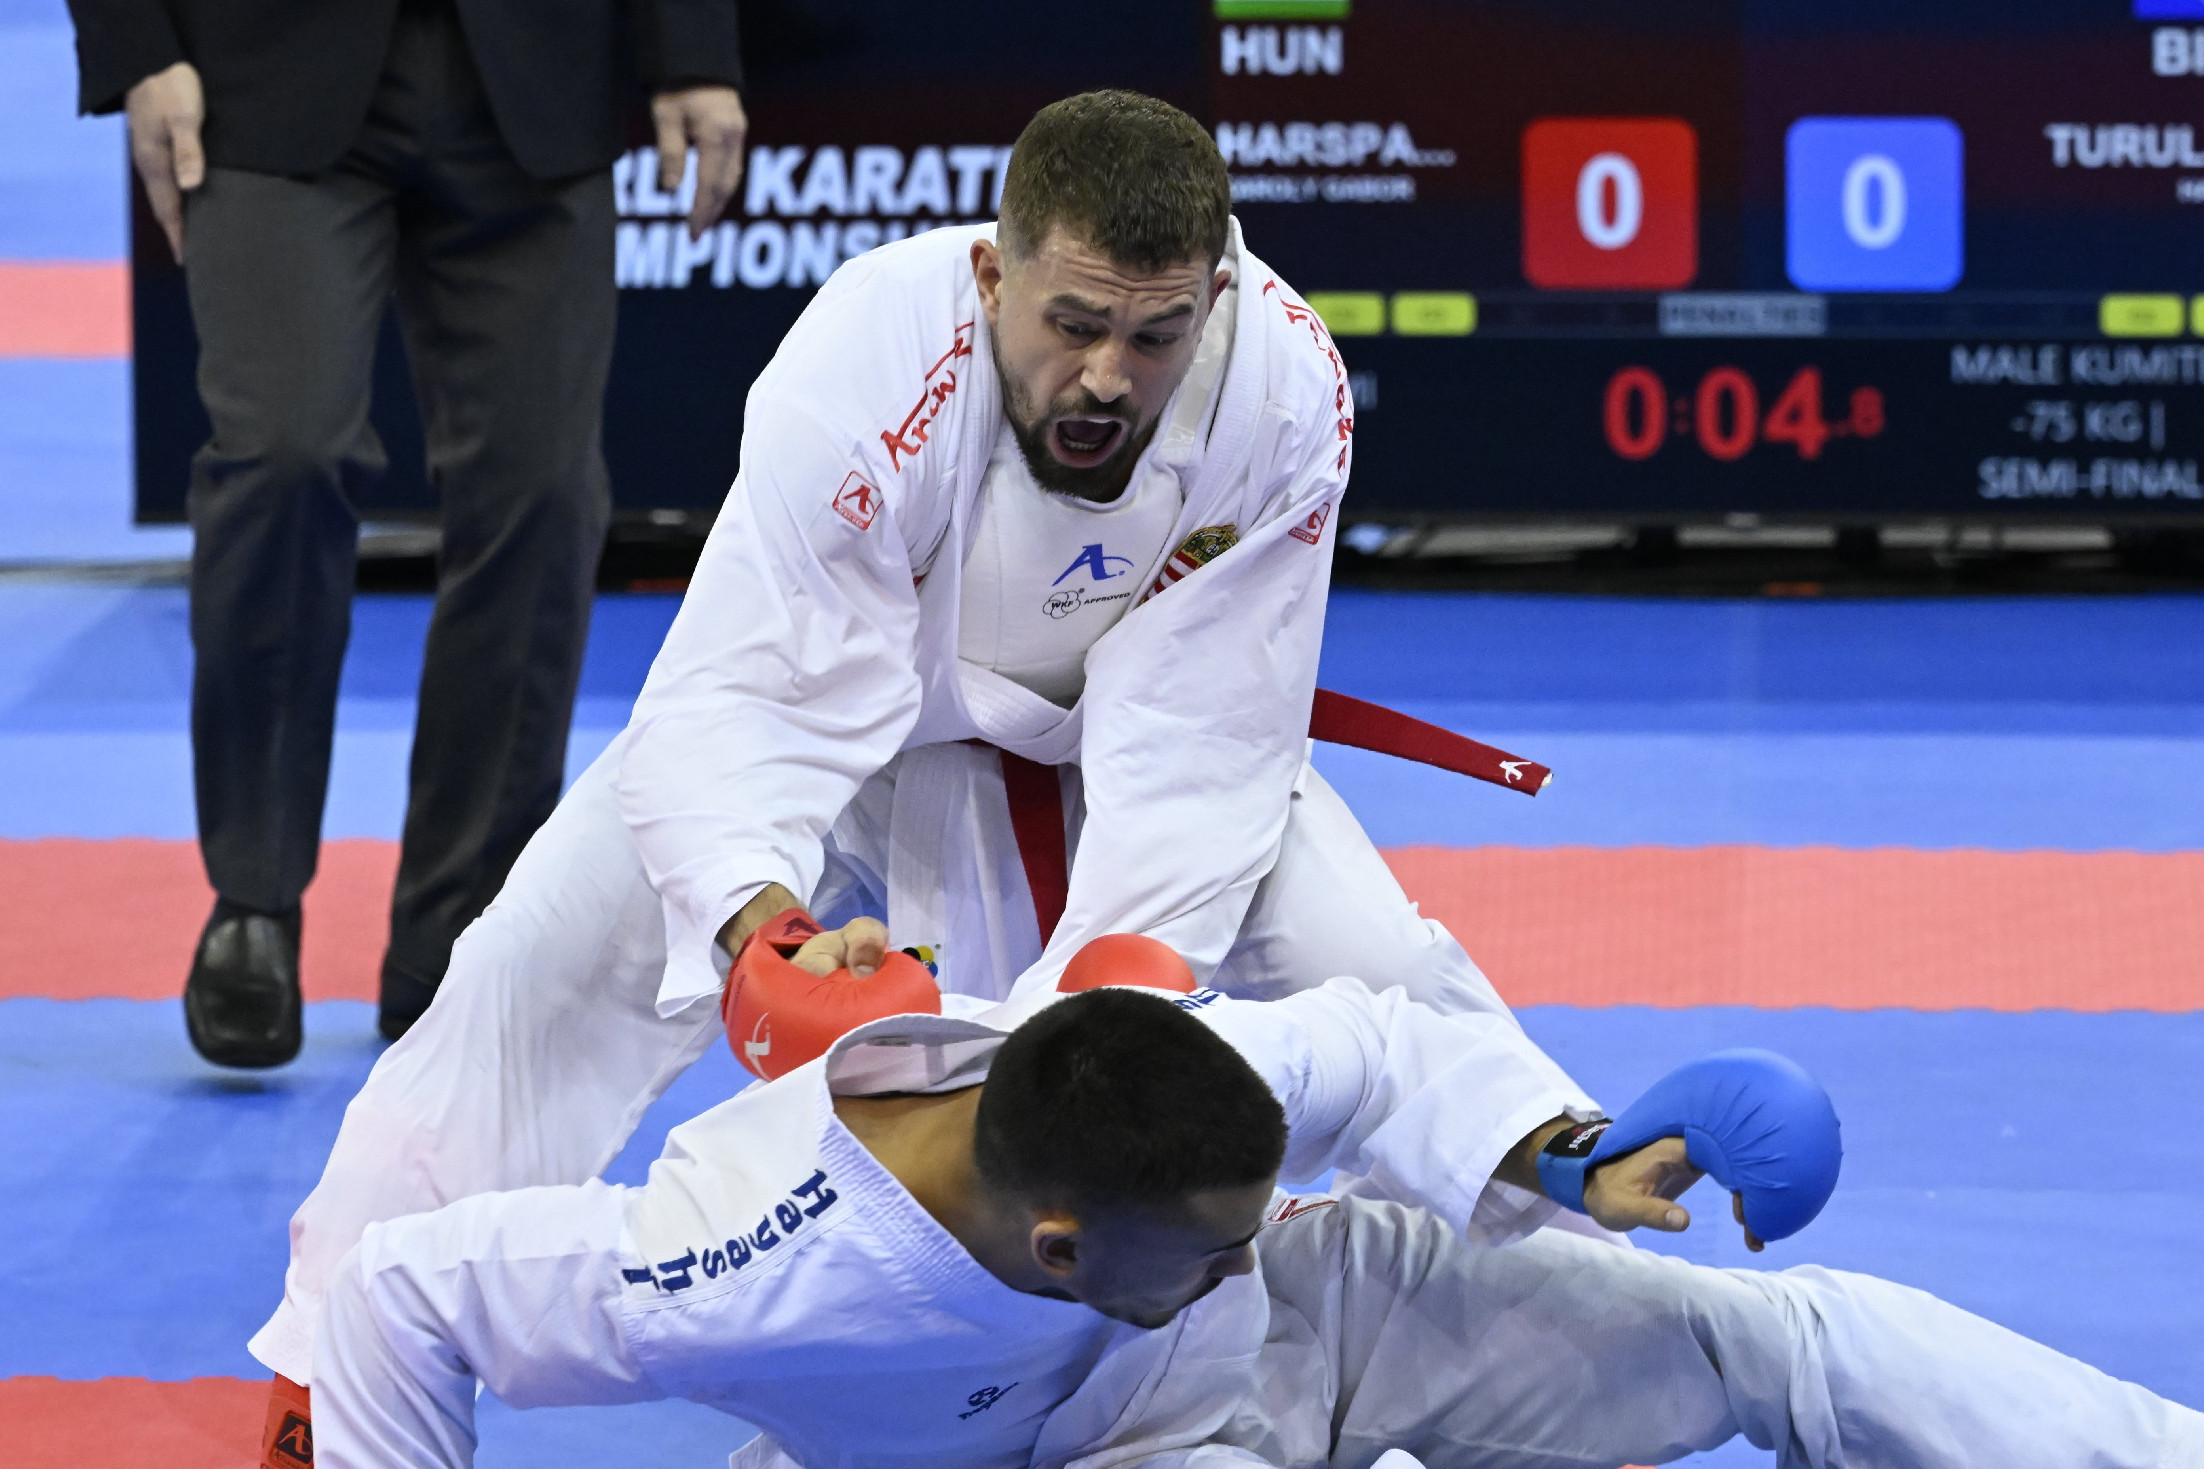 Karate-vb: Hárspataki Gábor döntős